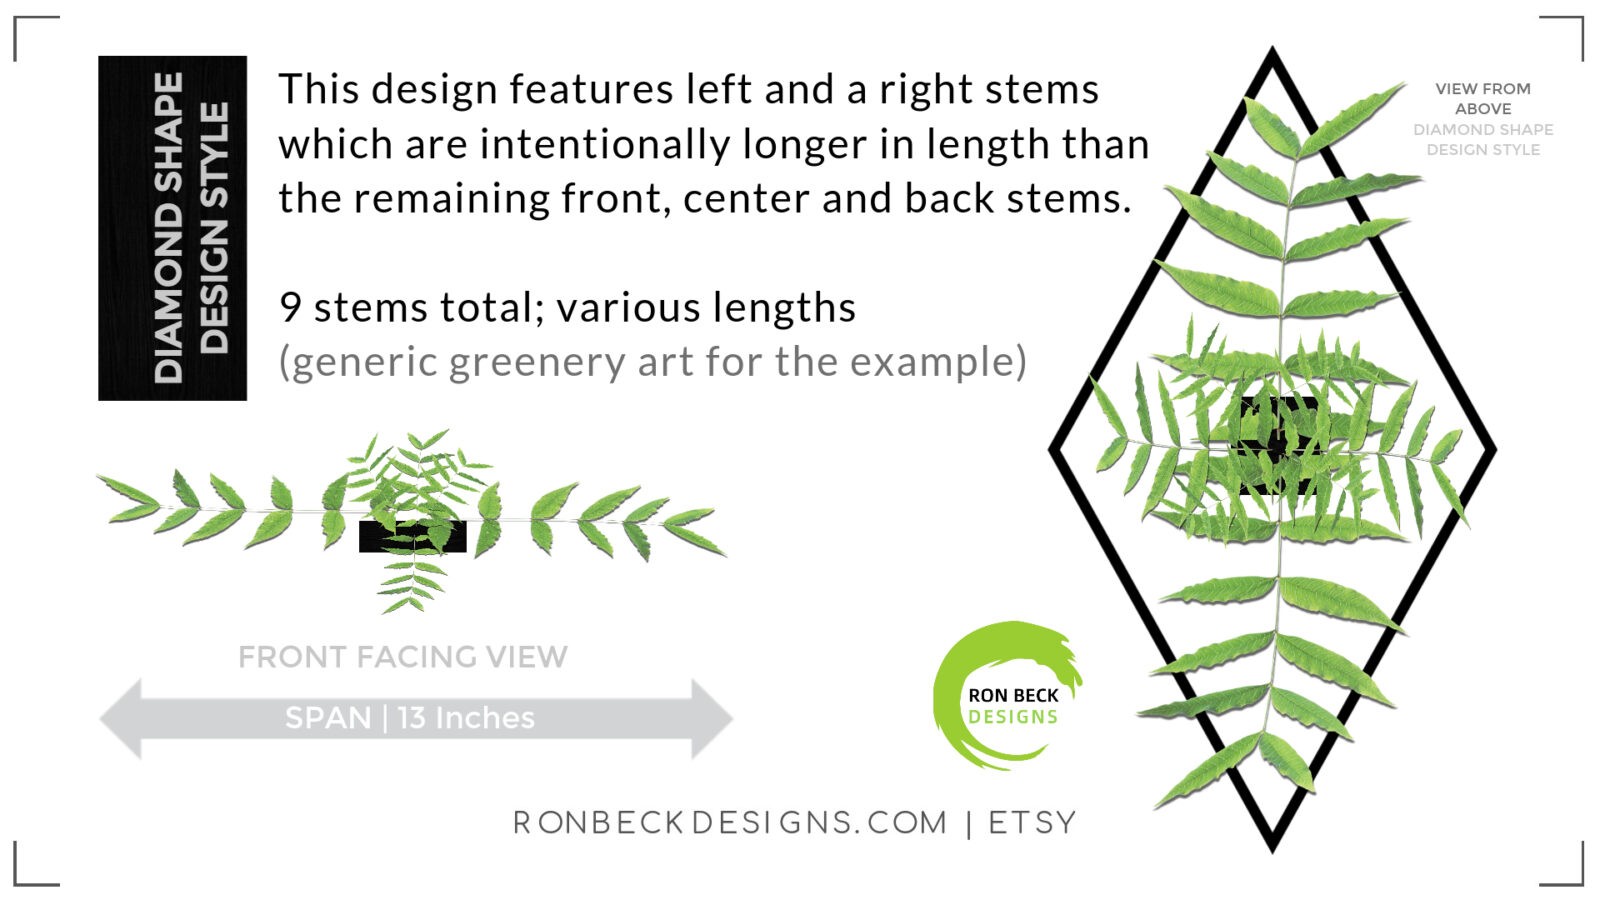 Ron Beck Designs - Artificial Plants - Diamond Style Plant Design 1920x1080